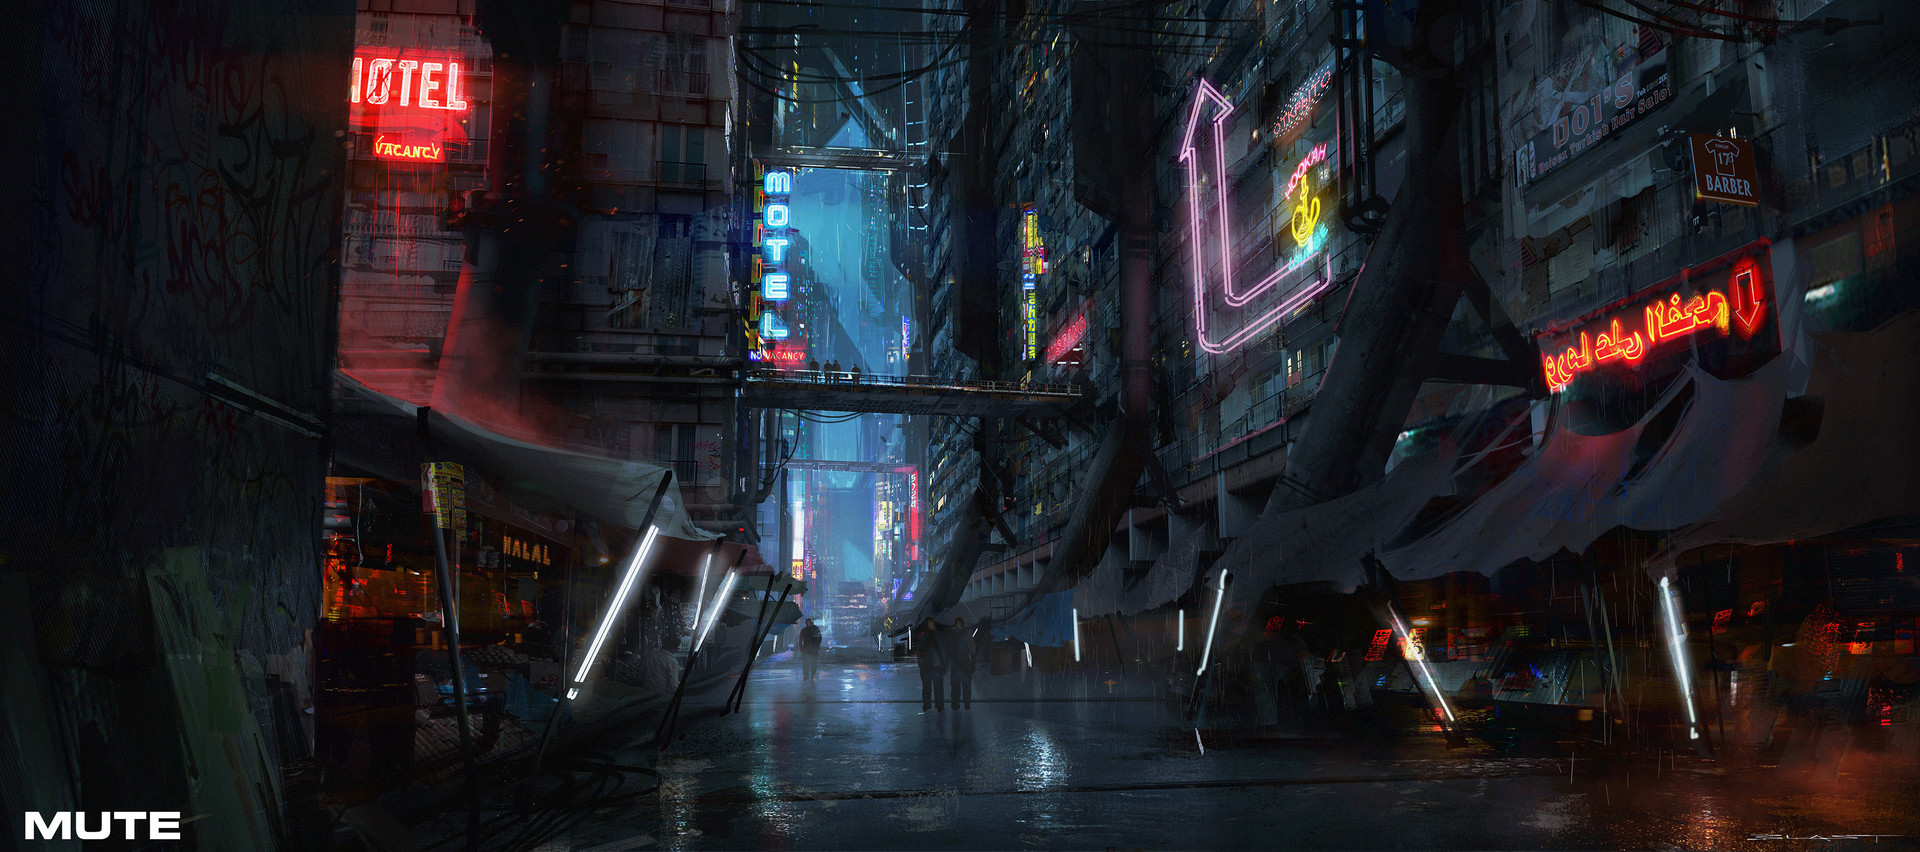 General 1920x852 digital art artwork movies futuristic science fiction motel rain night city street Berlin